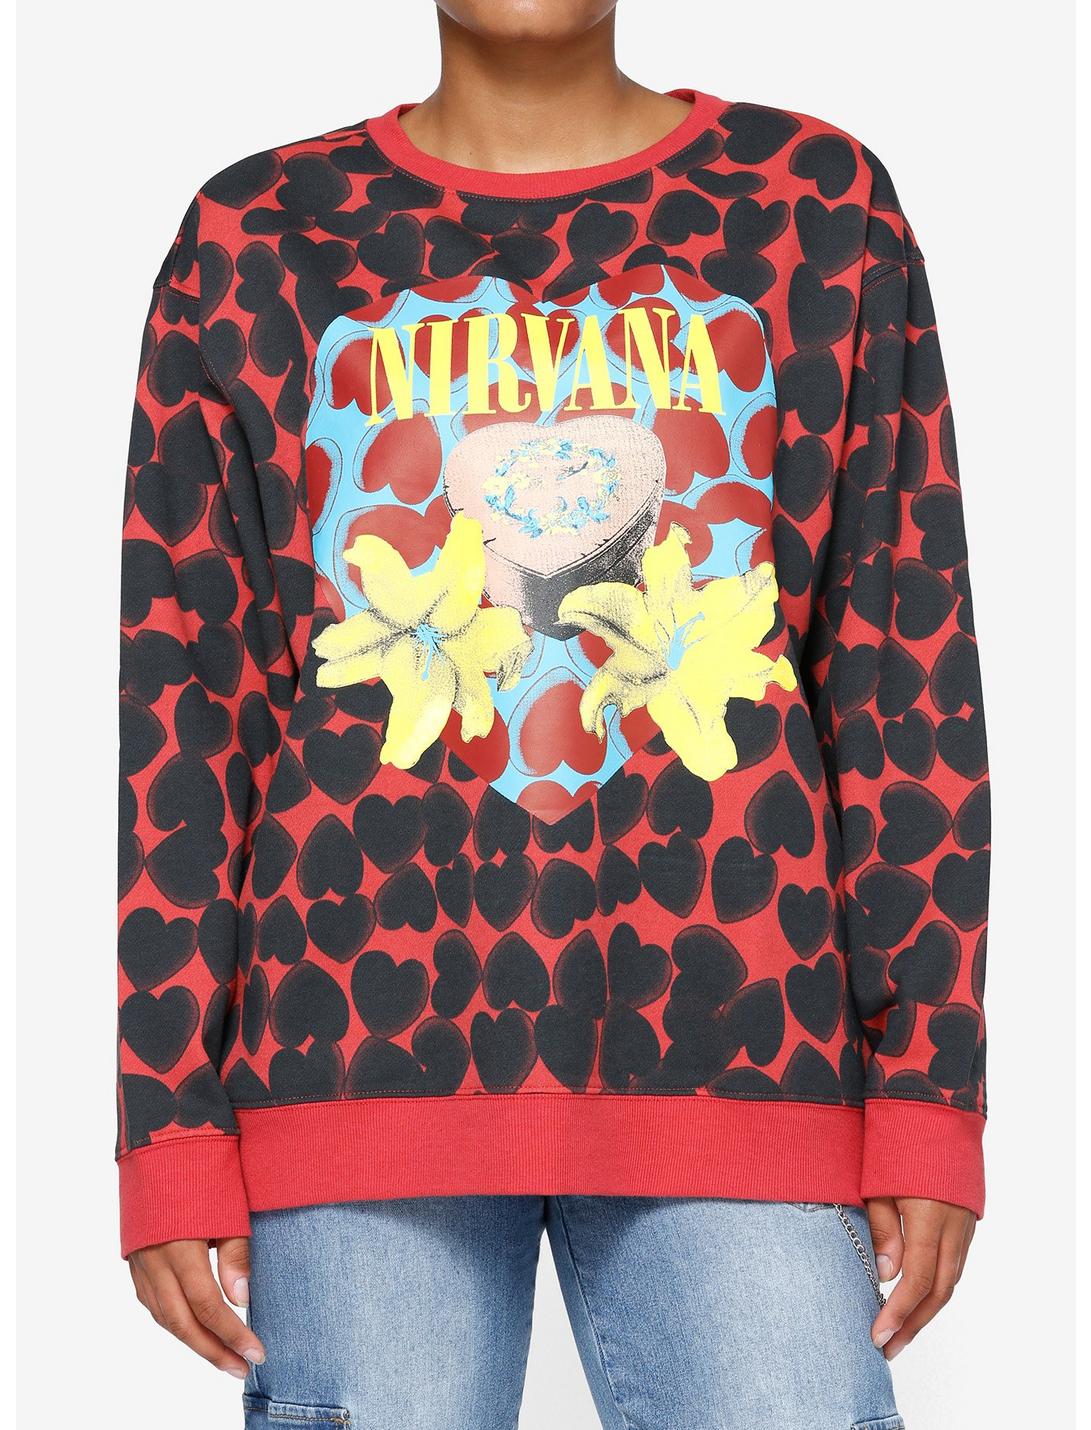 Nirvana Heart-Shaped Box Allover Print Girls Sweatshirt, MULTI, hi-res